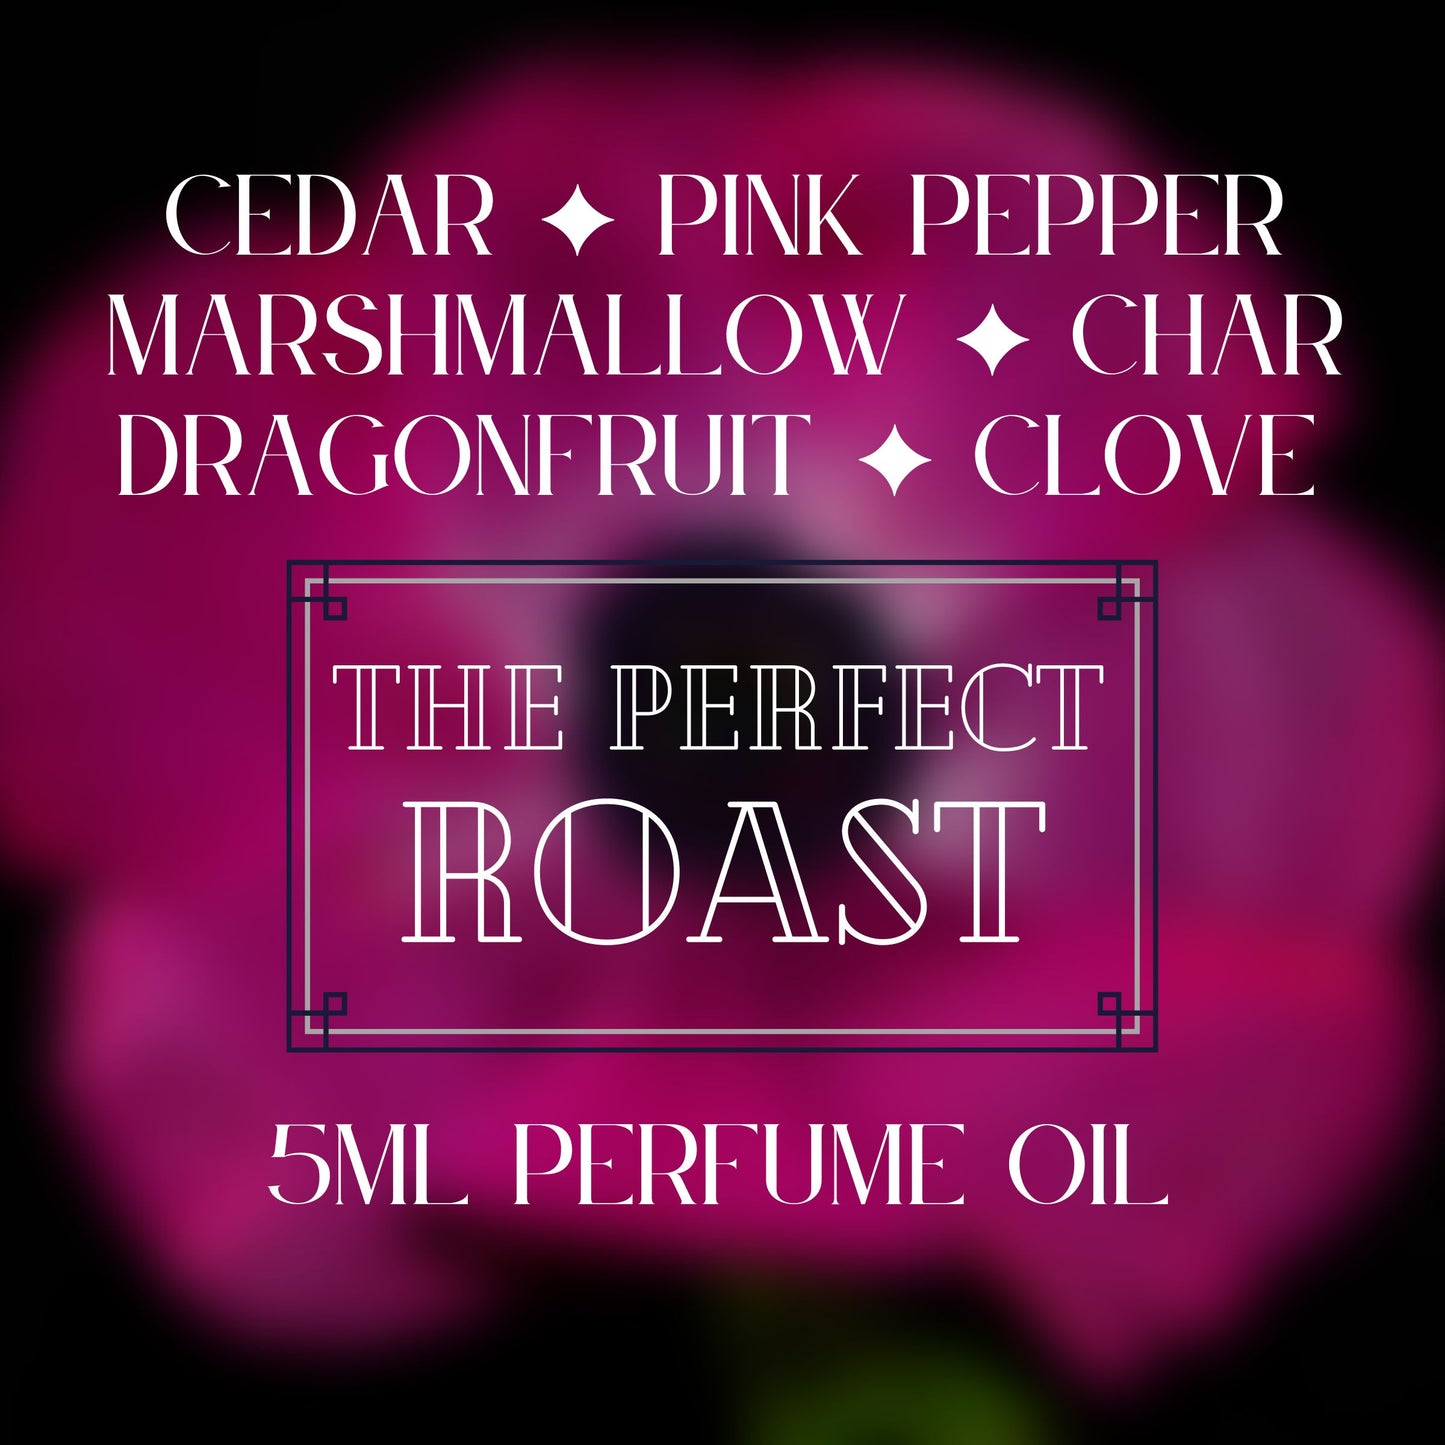 THE PERFECT ROAST perfume oil